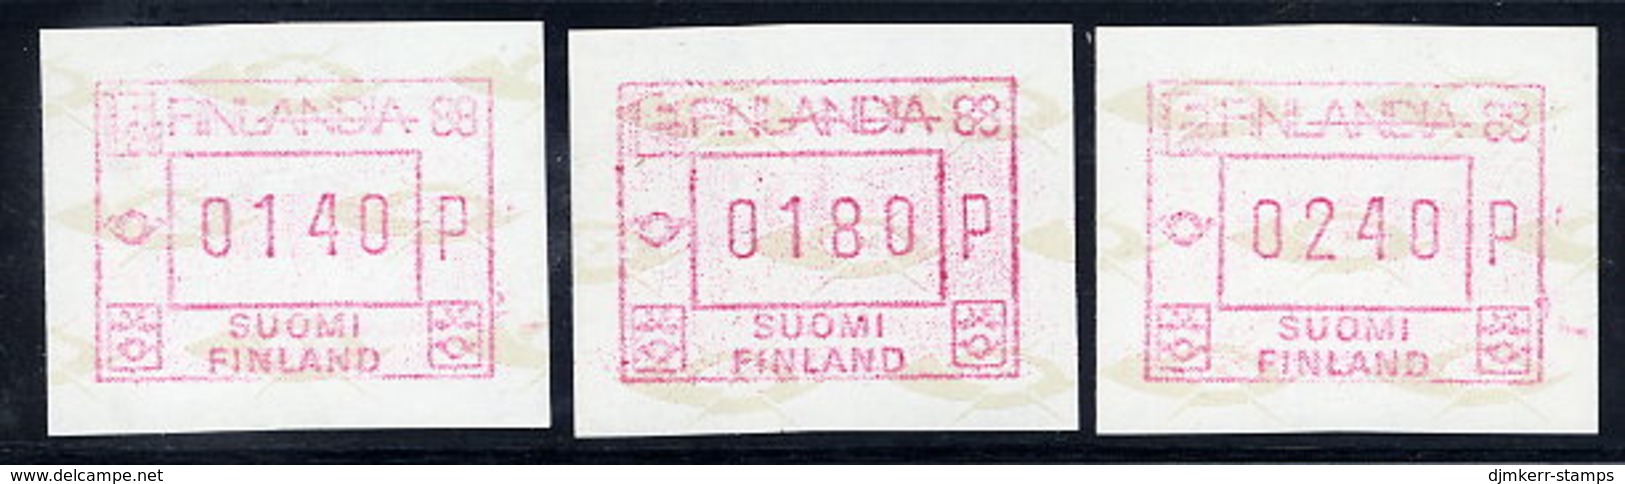 FINLAND 1988 FINLANDIA '88  Issue 3 Different Values MNH / ** .  Michel 4 - Vignette [ATM]